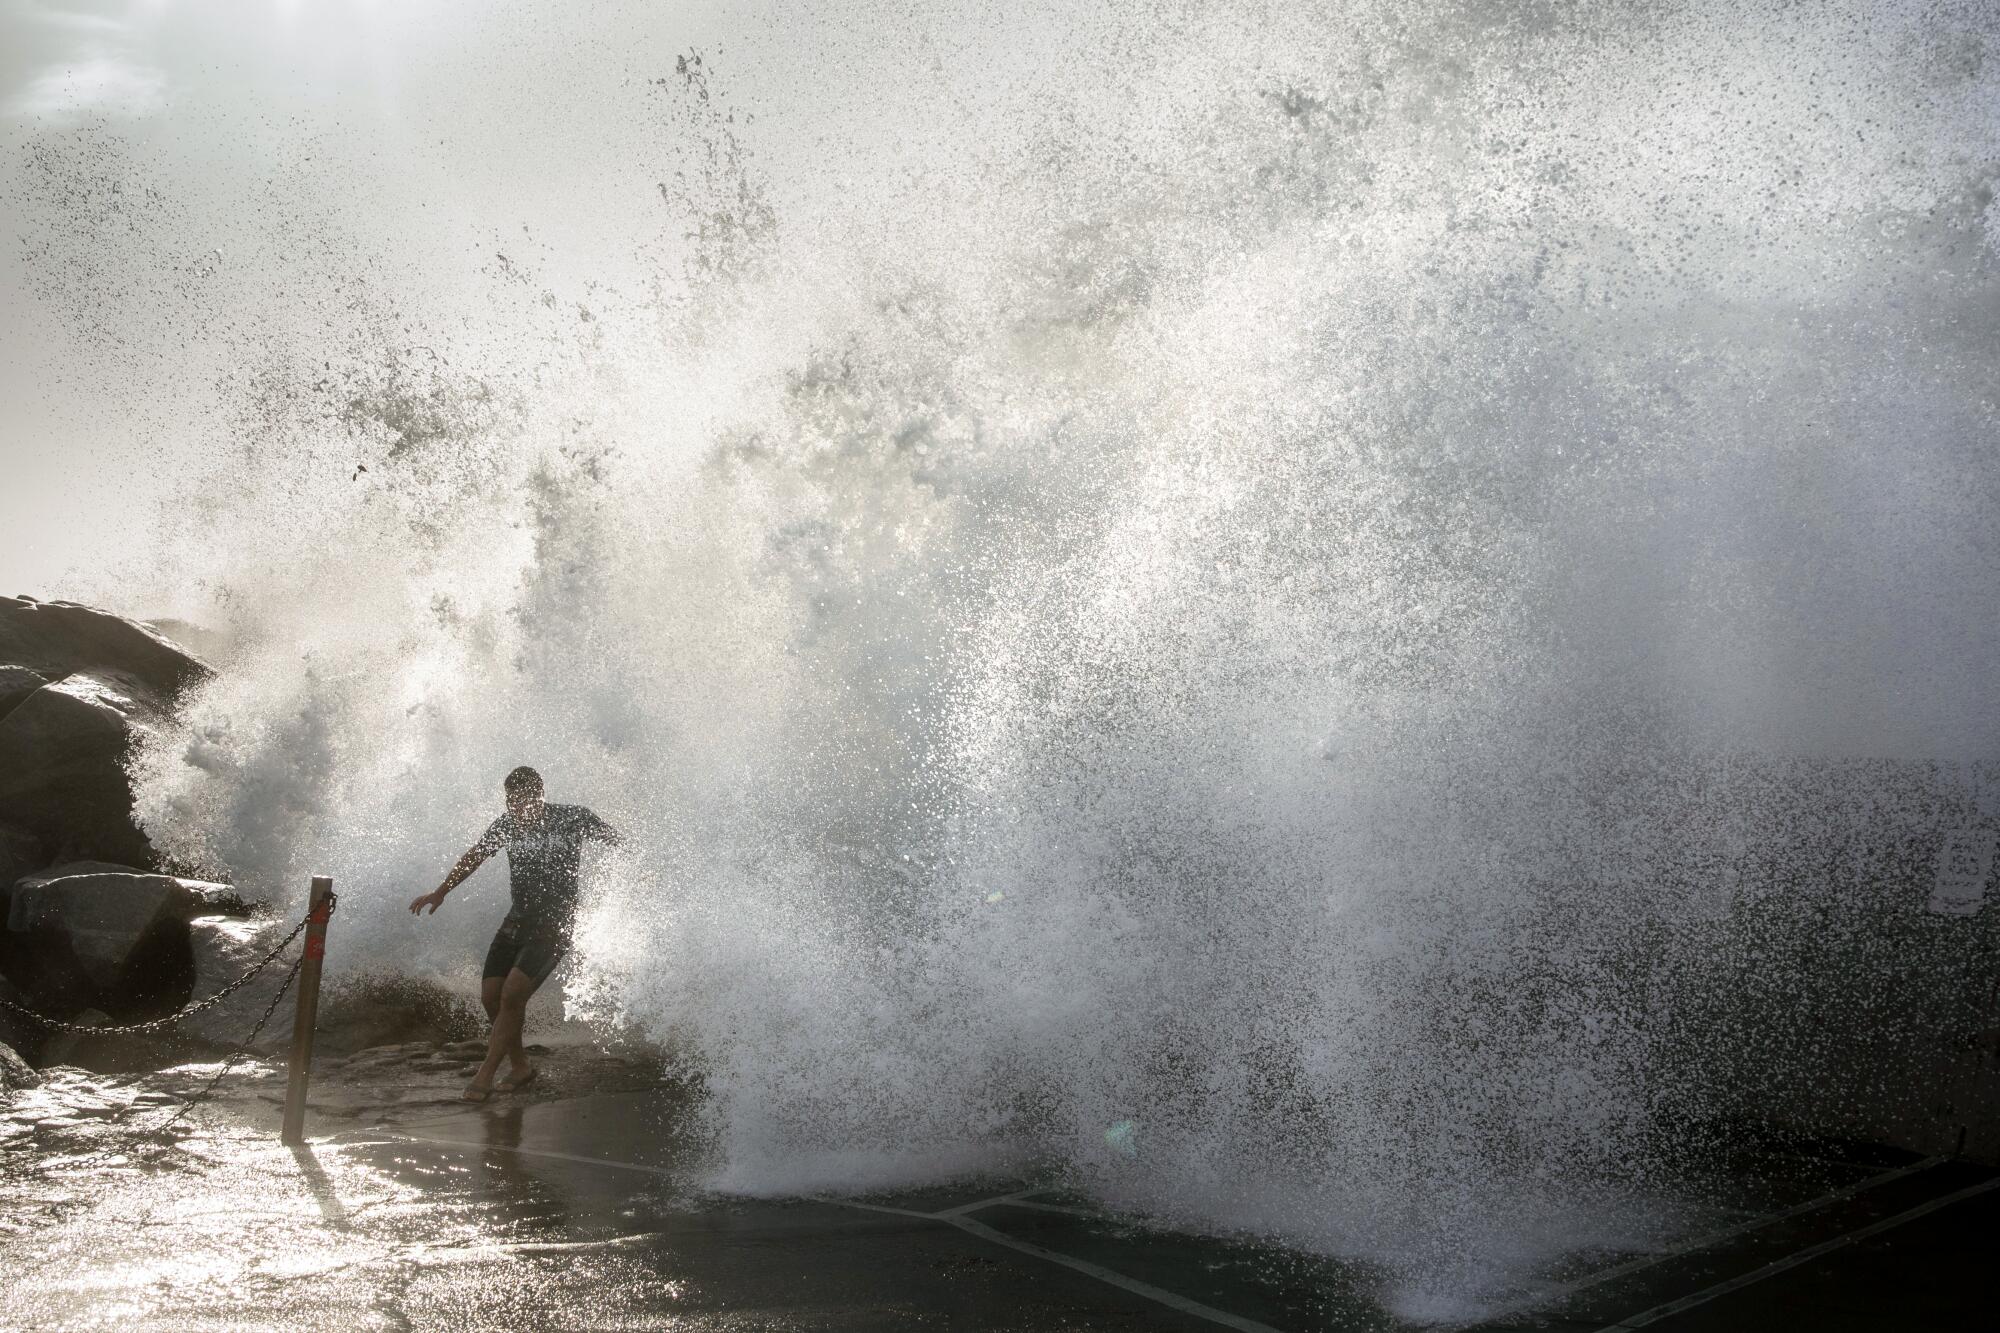 A teen boy runs as large wave comes crashing over a breakwall.